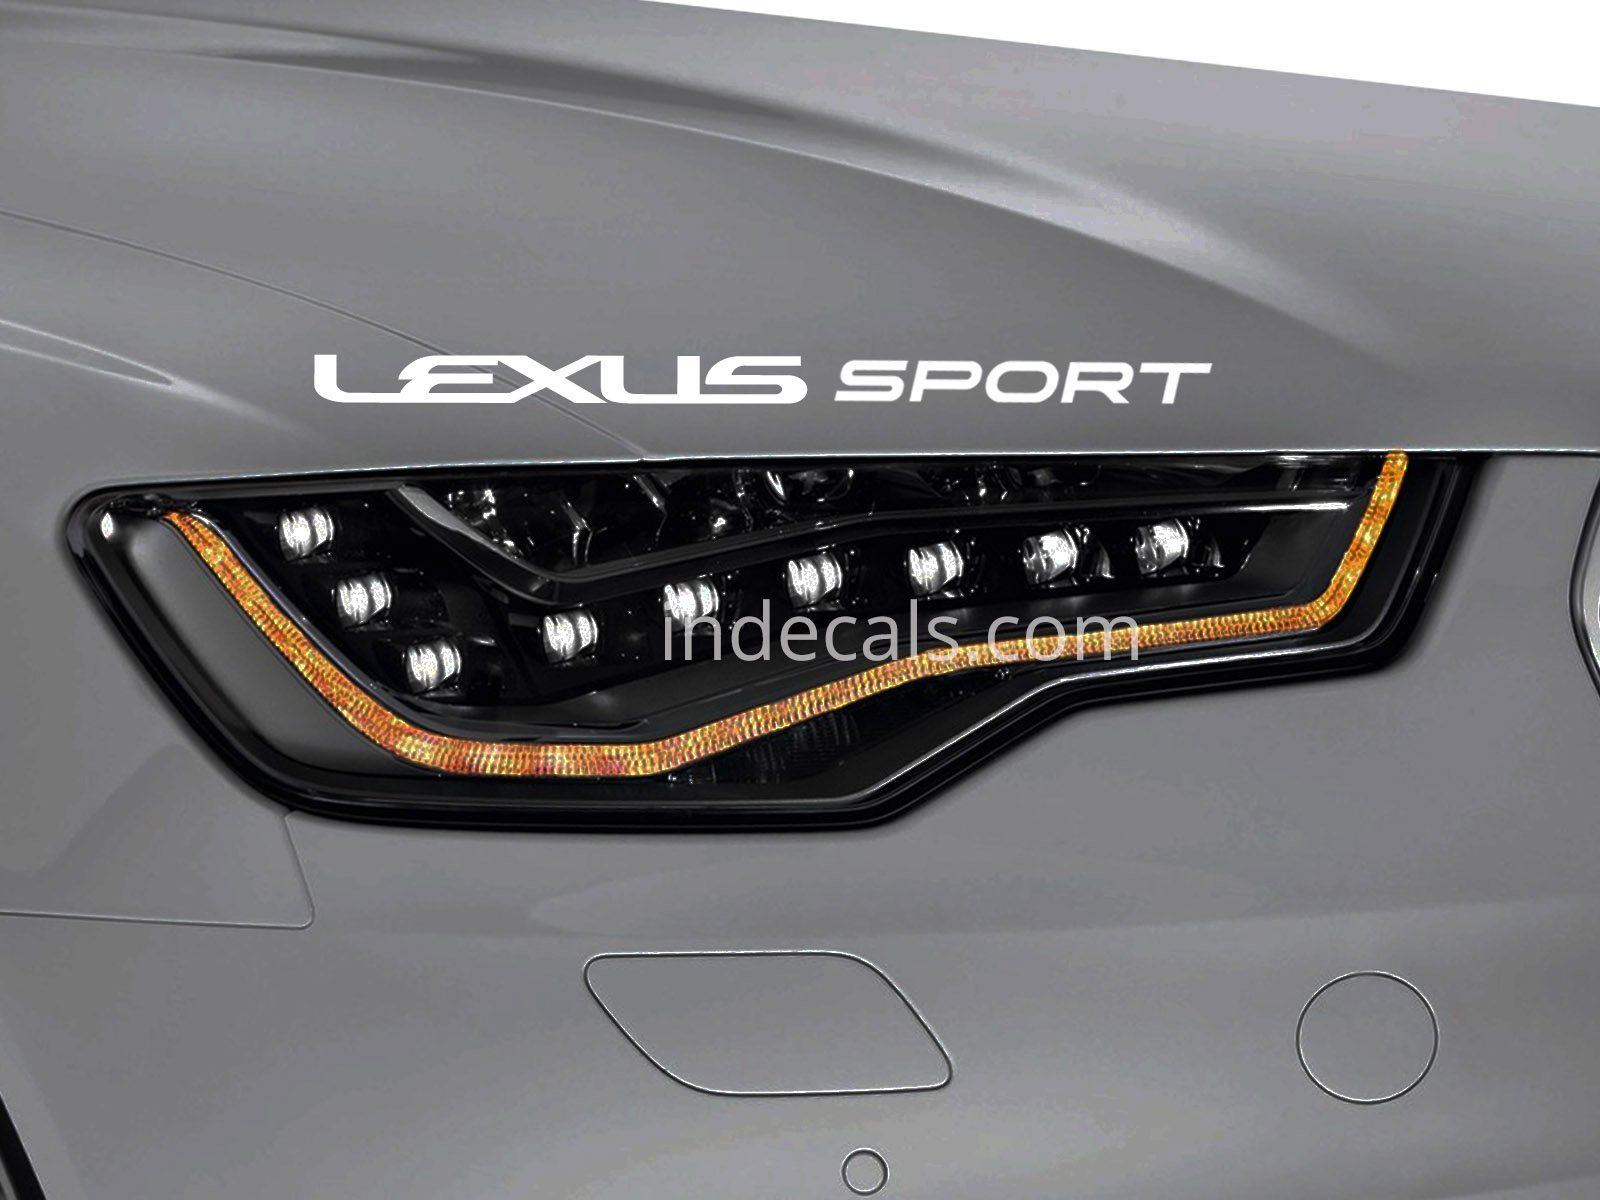 1 x Lexus Sport Sticker for Eyebrow - White